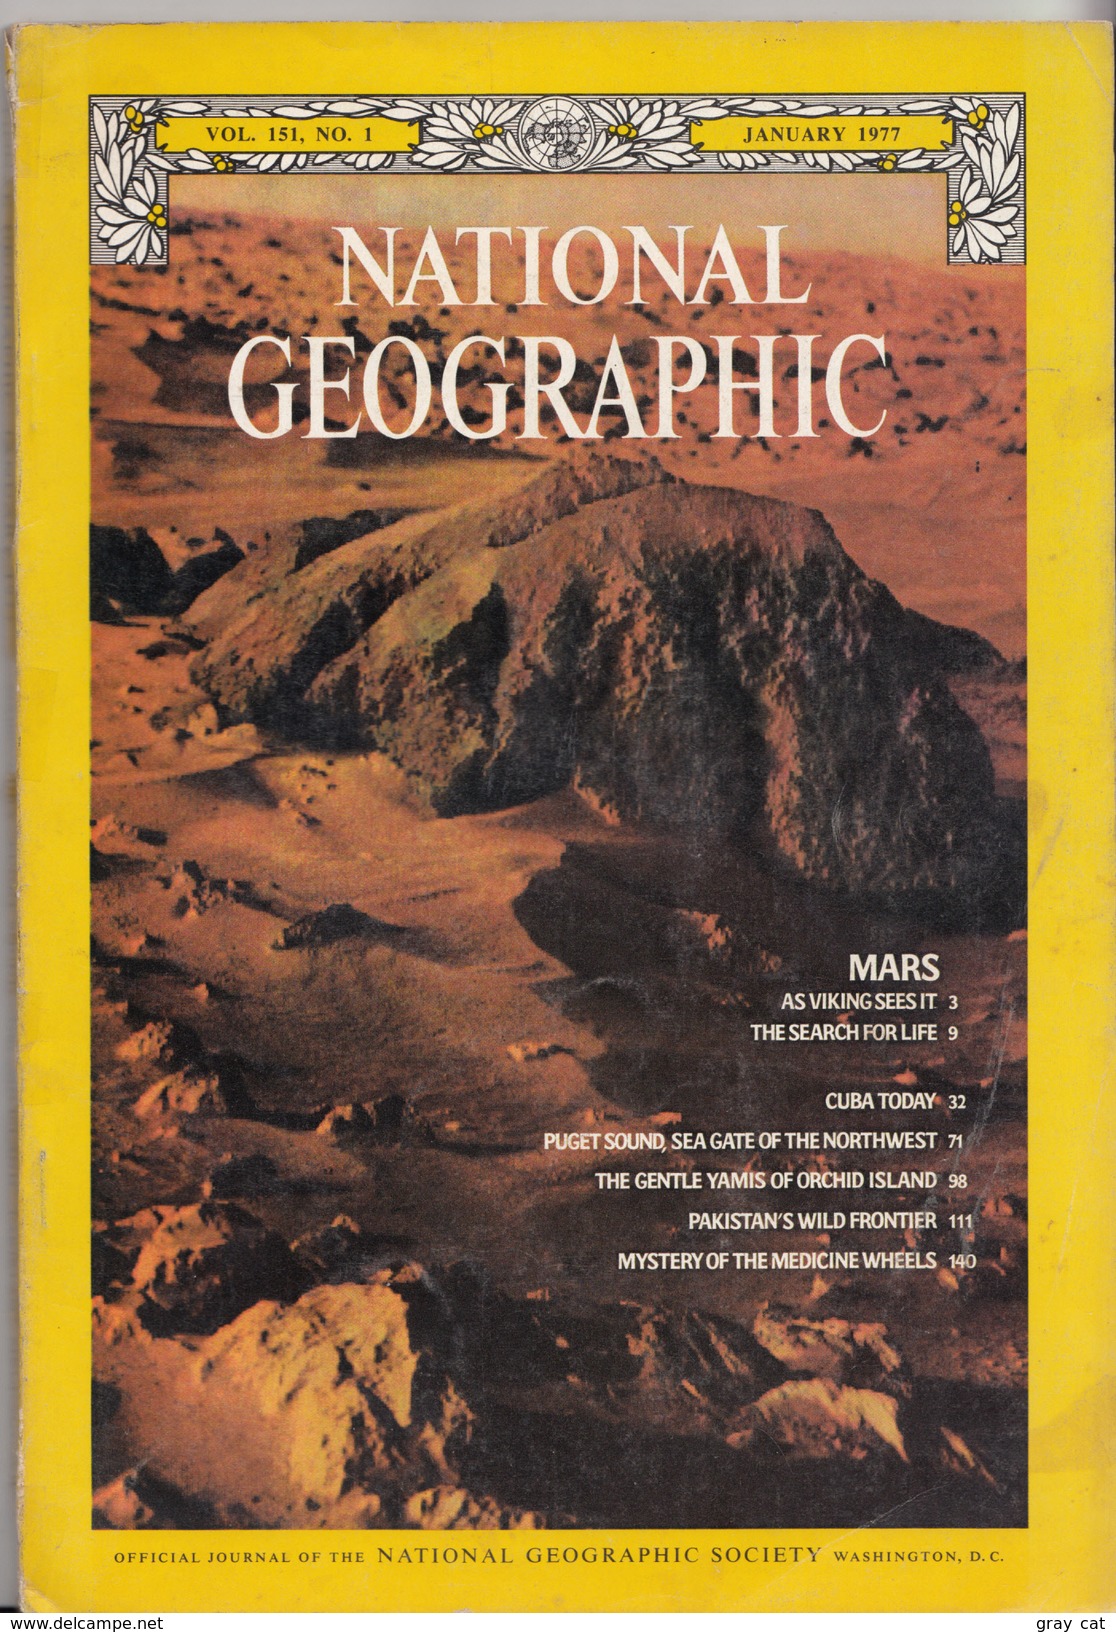 National Geographic Magazine Vol. 151, No. 1, January 1977 - Voyage/ Exploration